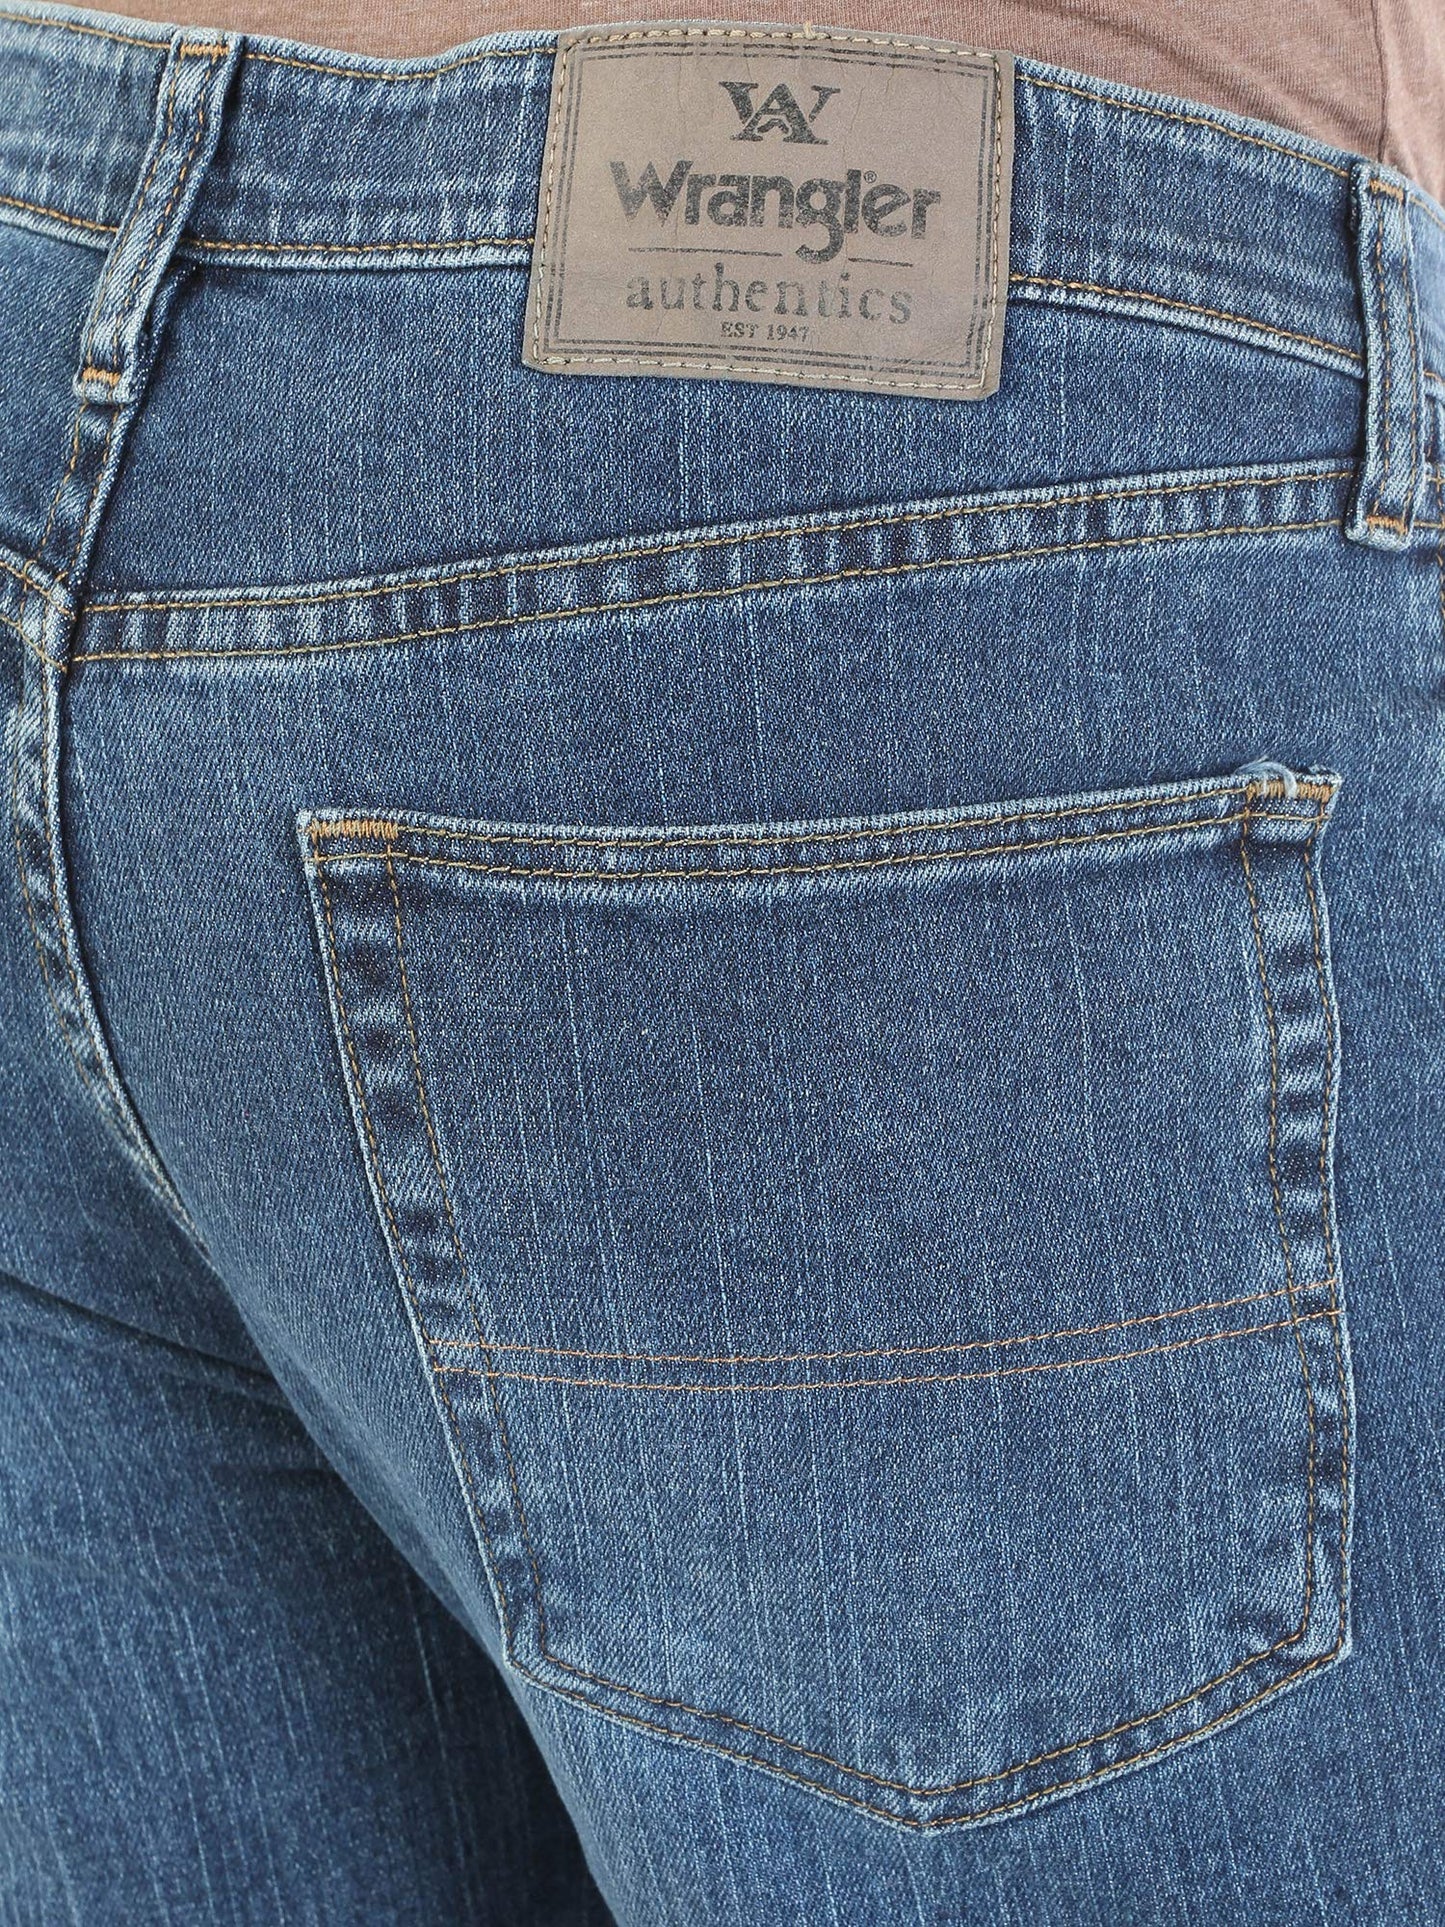 Wrangler Authentics Men's Big & Tall Regular Fit Comfort Flex Waist Jean, Blue Ocean, 46W x 30L